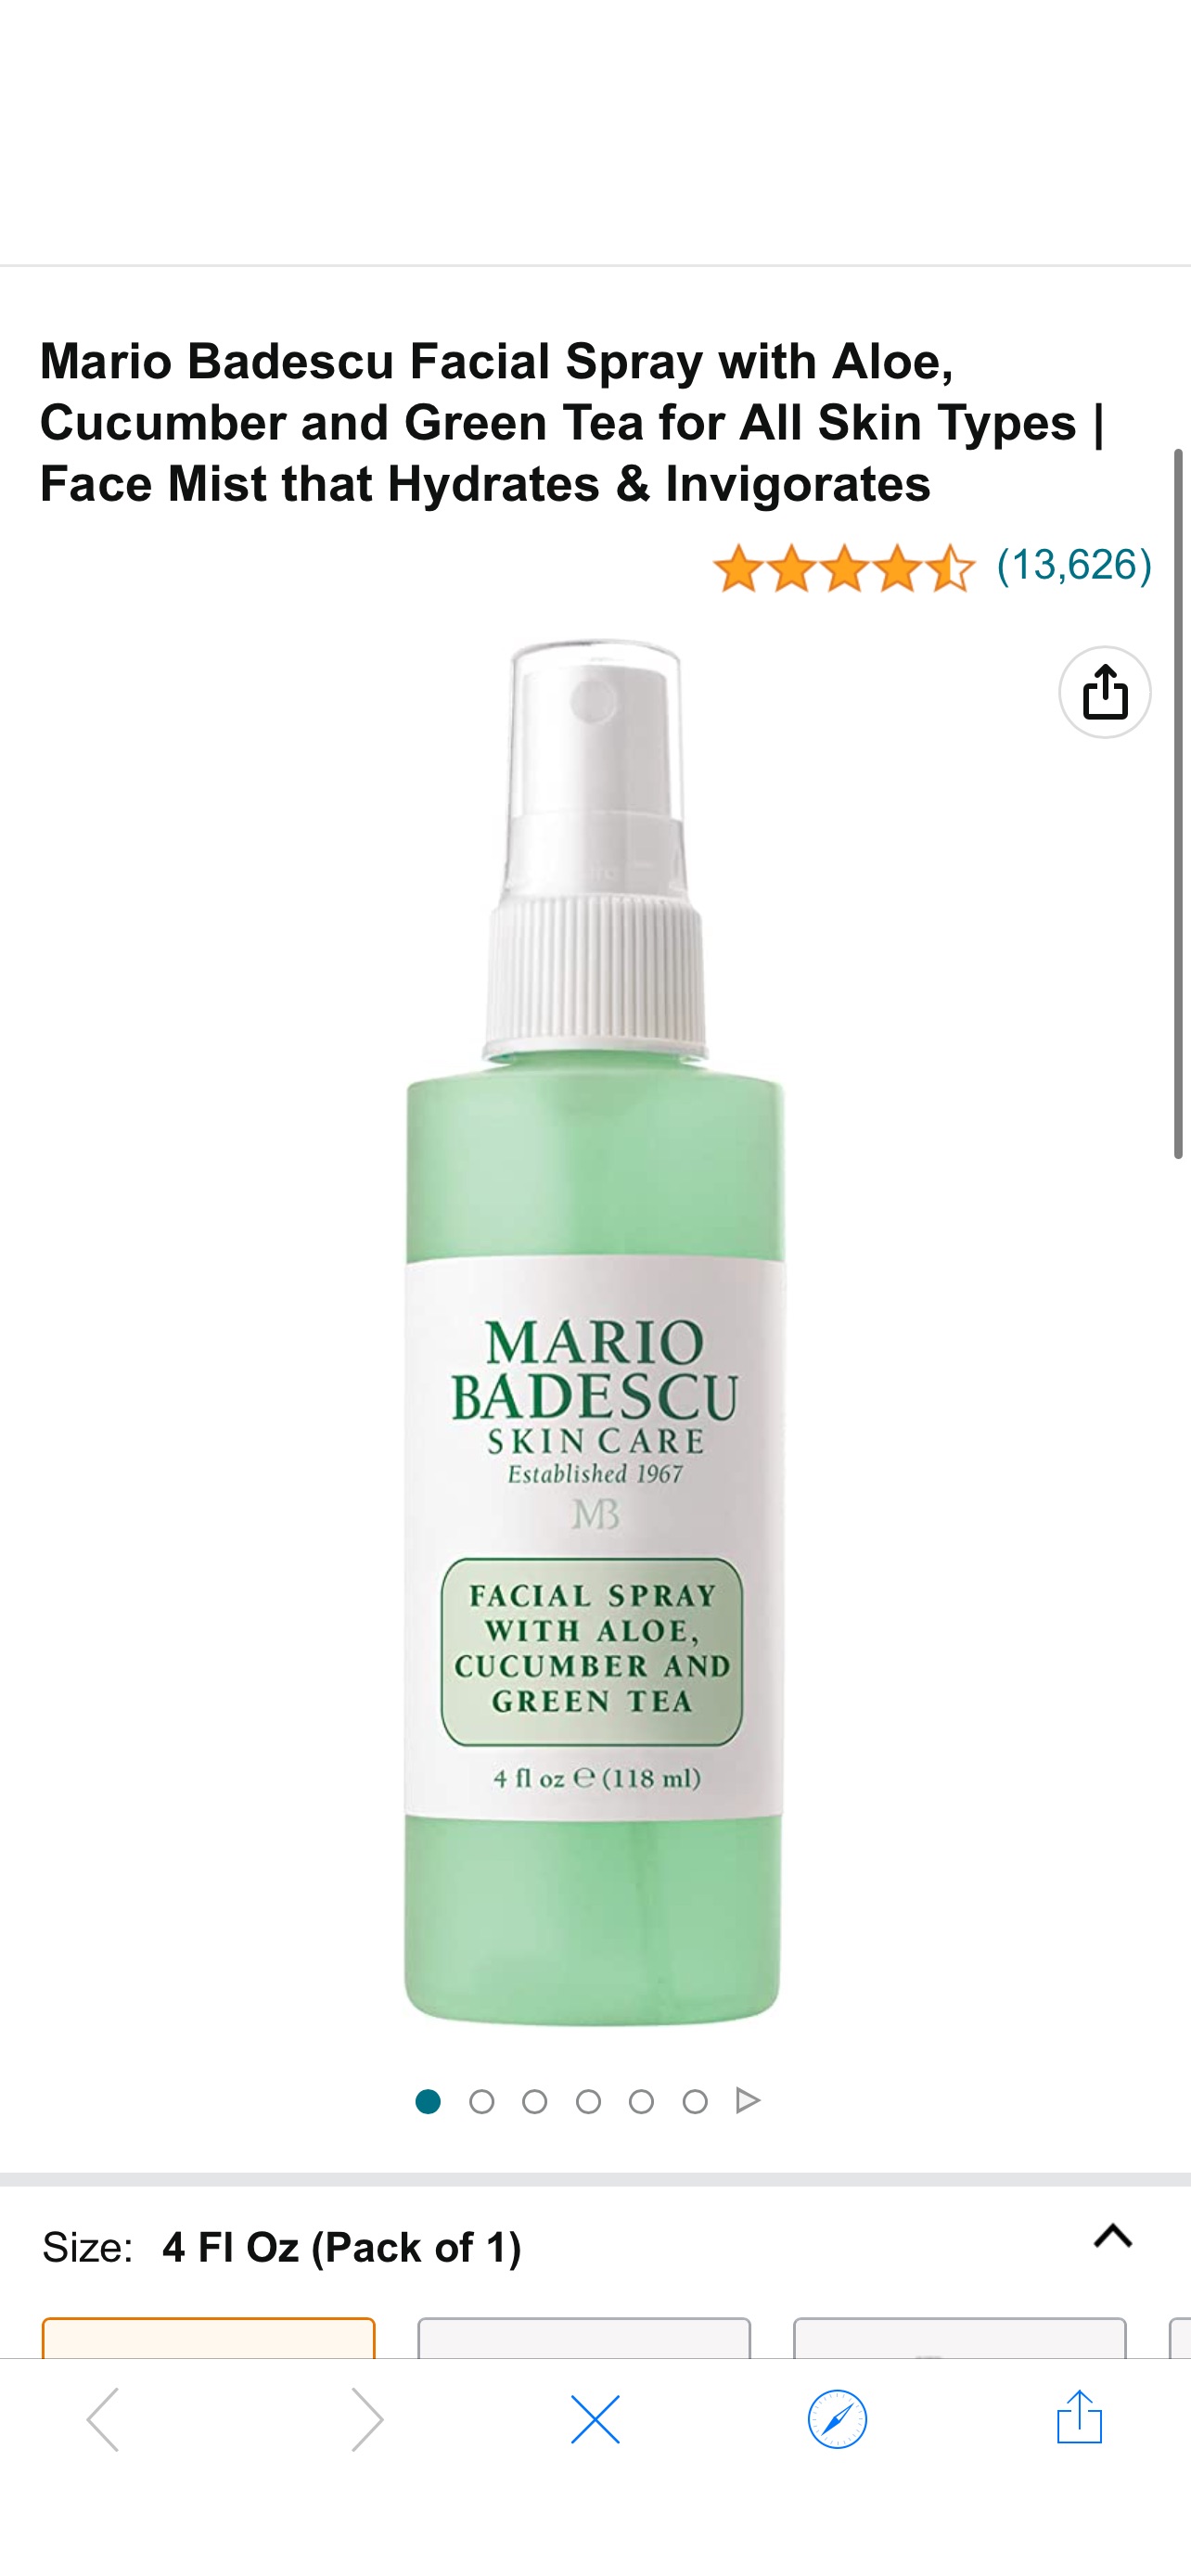 Amazon.com: Mario Badescu Facial Spray with Aloe, Cucumber and Green Tea for All Skin Types | Face Mist that Hydrates & Invigorates | 4 FL OZ : Beauty & Personal Care